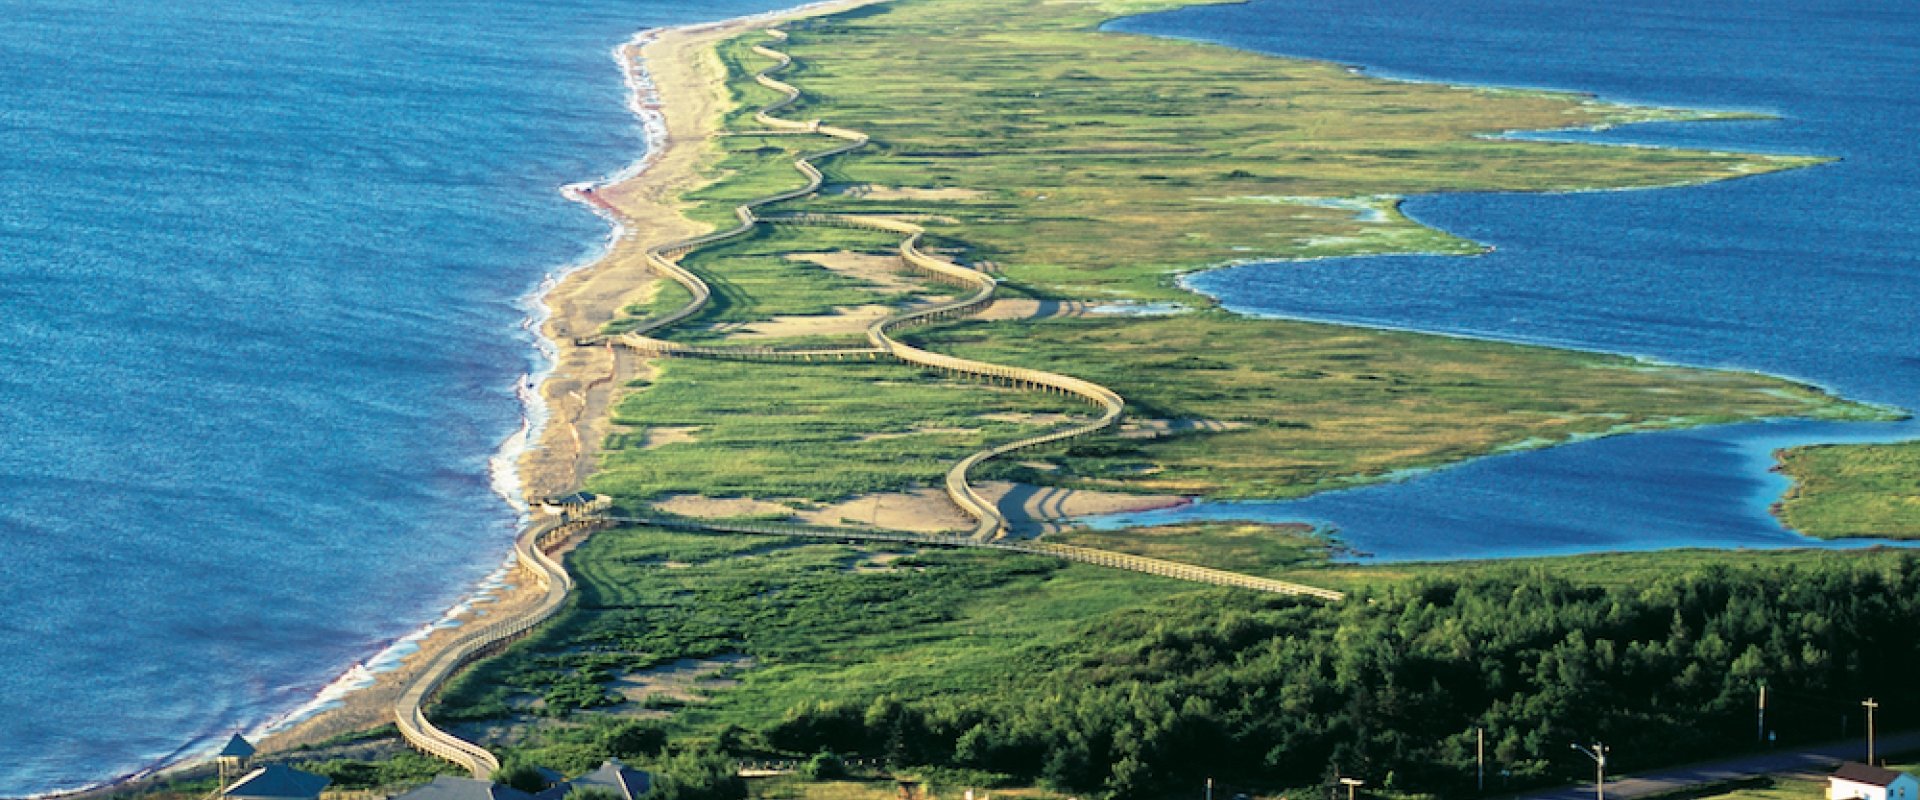 A winding road along a peninsula on the Acadian Coastal Drive